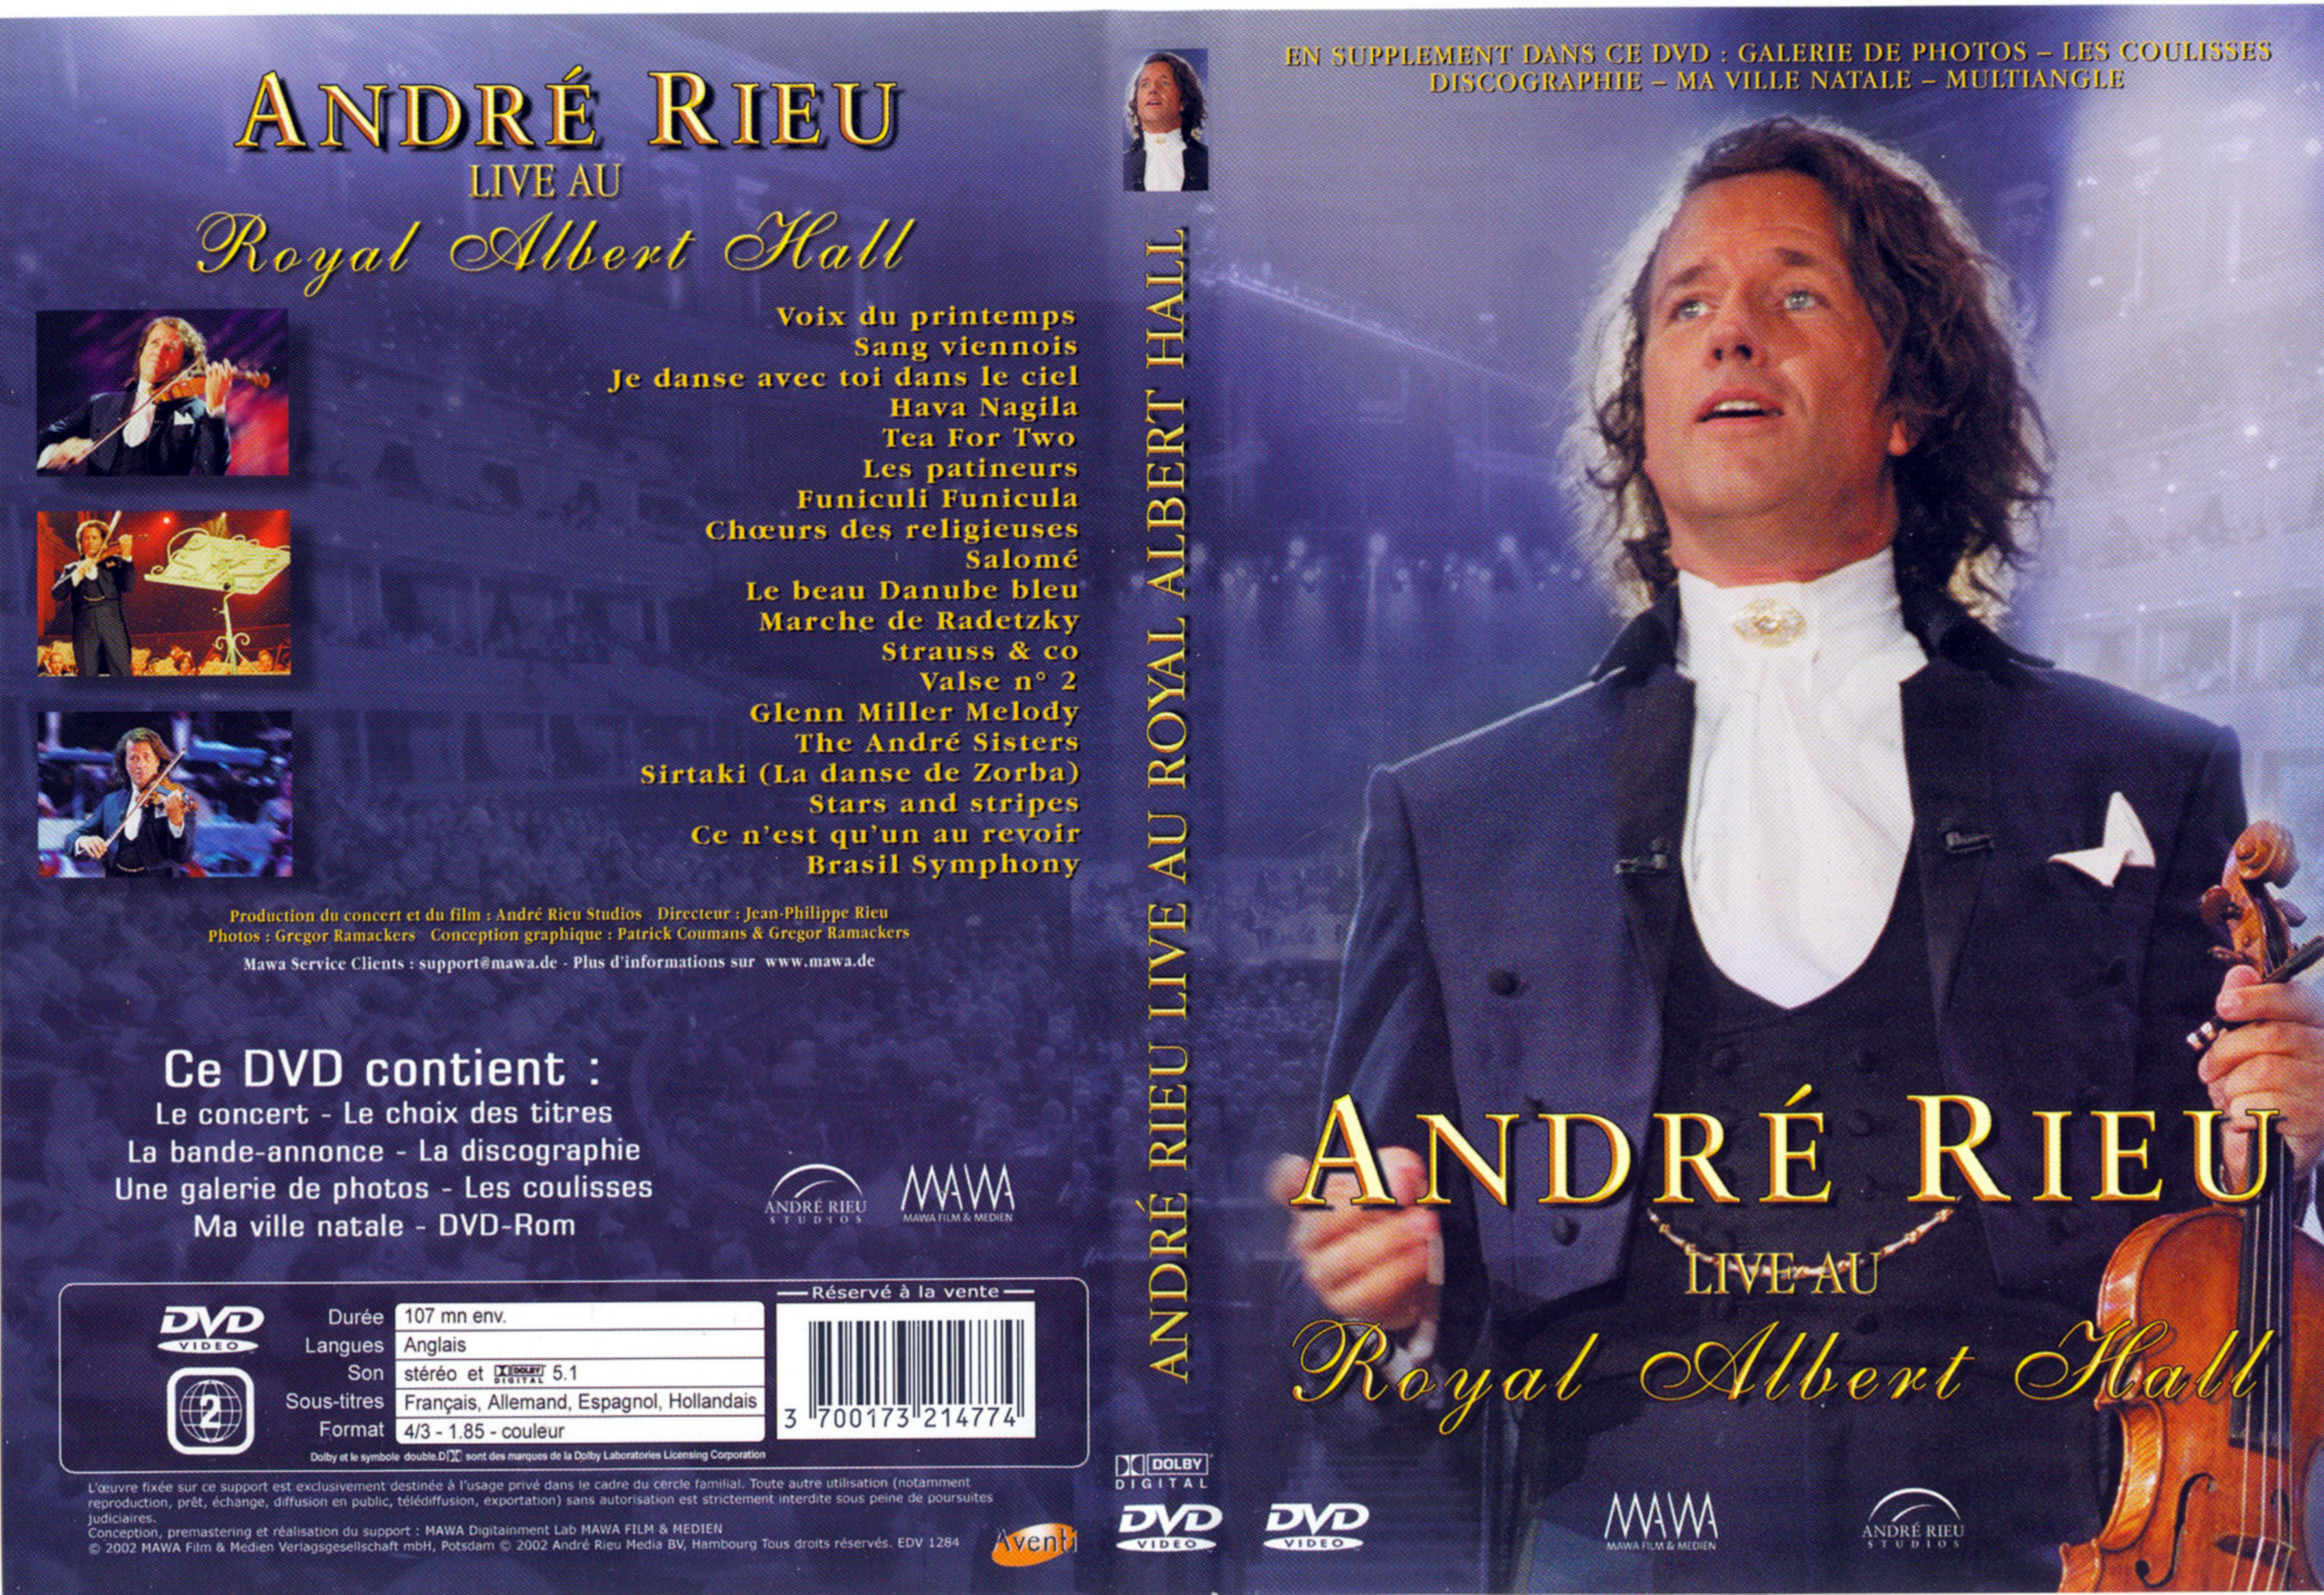 Jaquette DVD Andr Rieu Live au royal Albert Hall